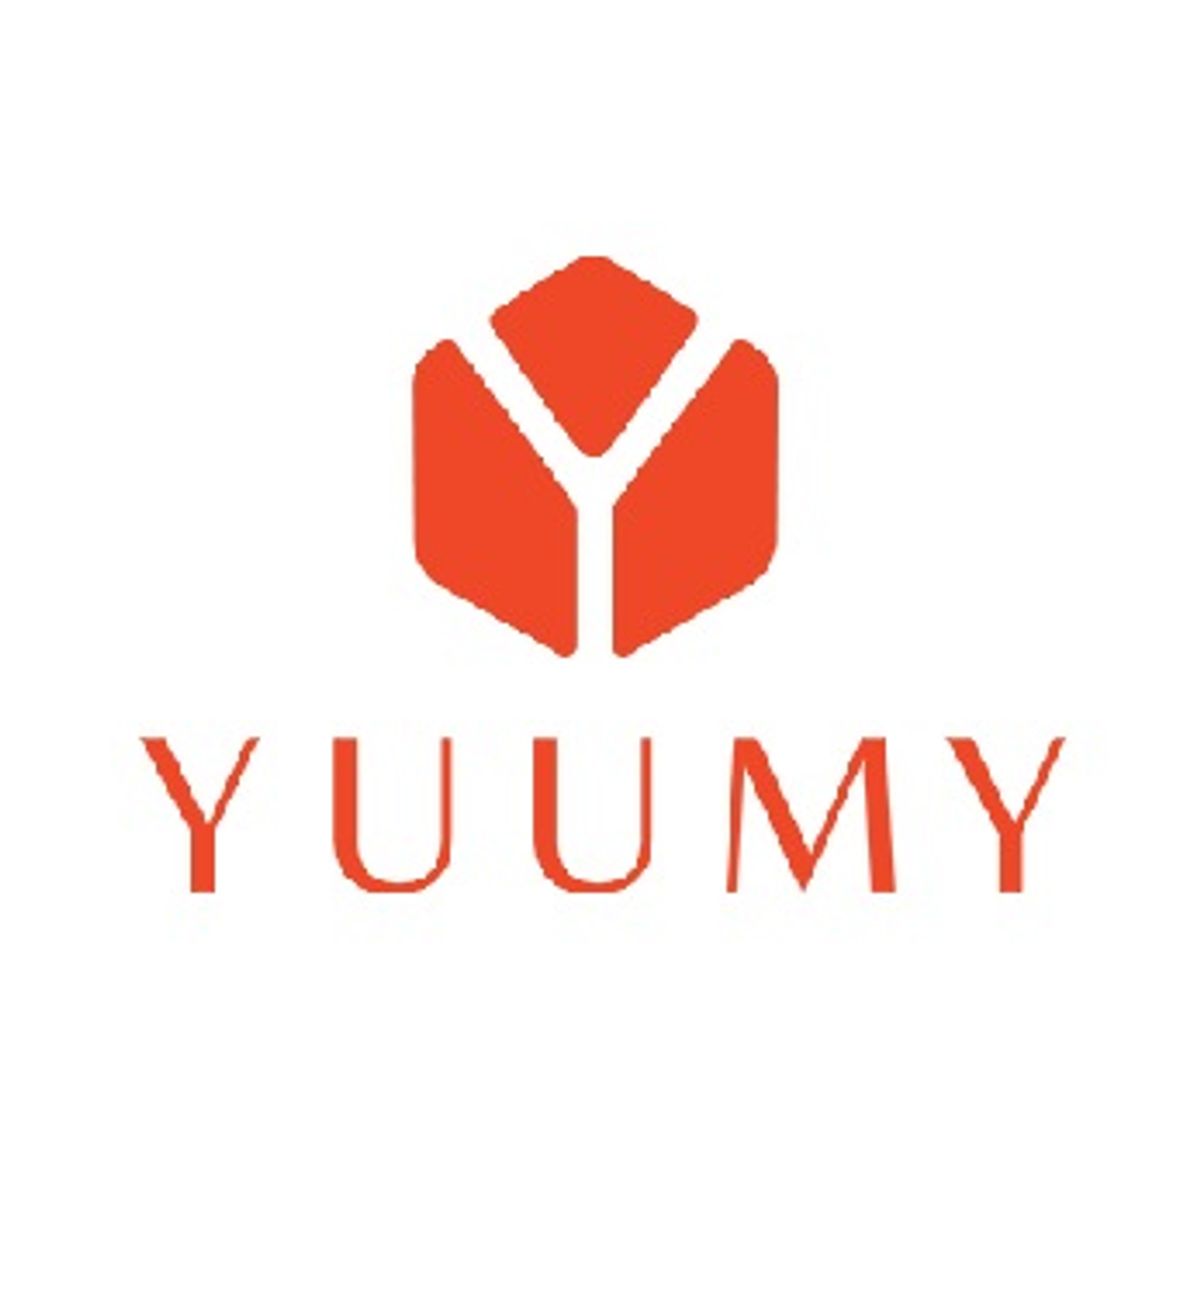 YUUMY logo